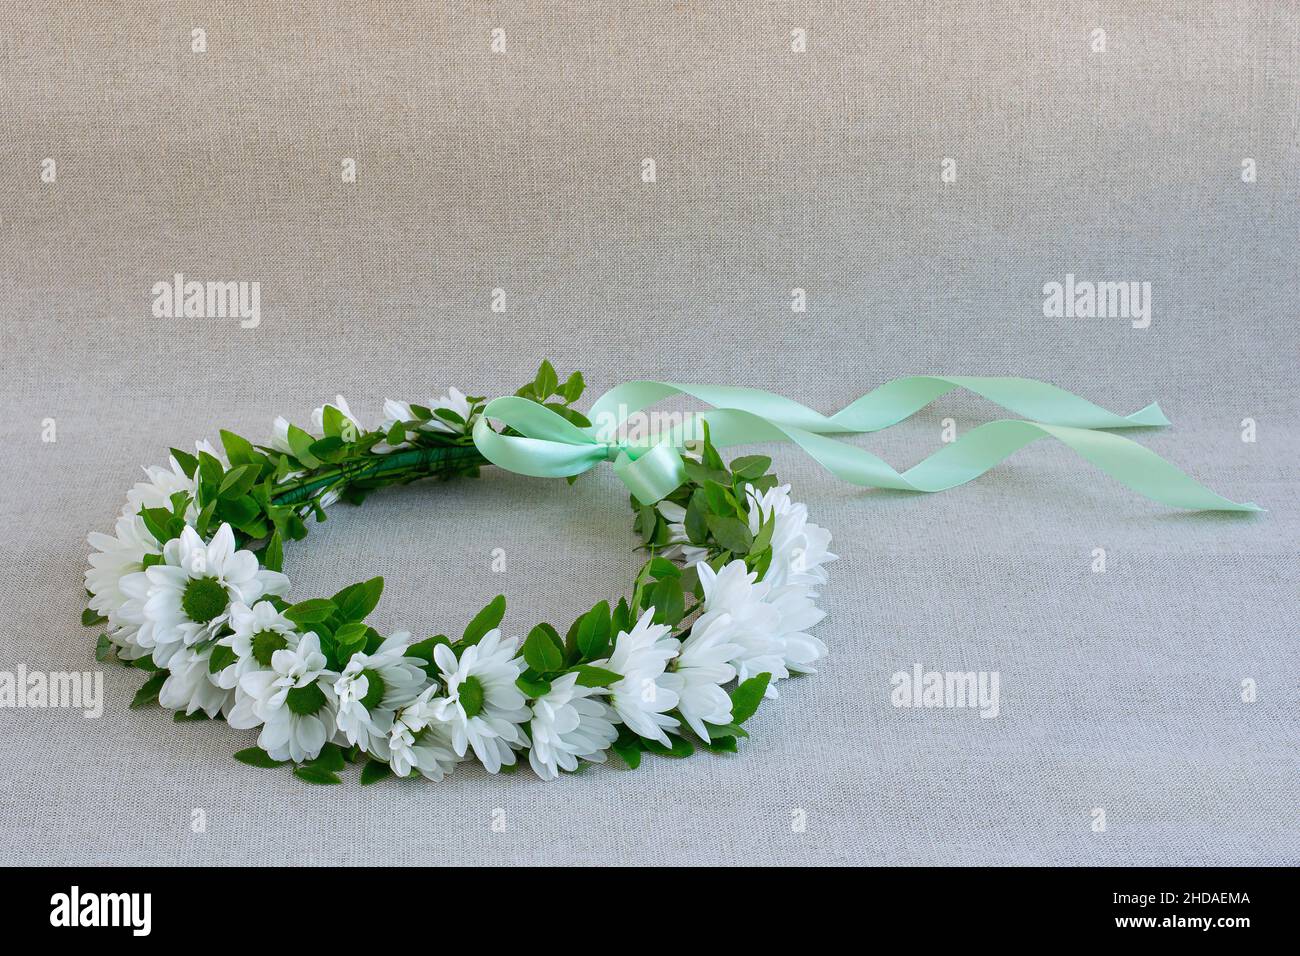 Wreath of white flowers on light linen background Stock Photo